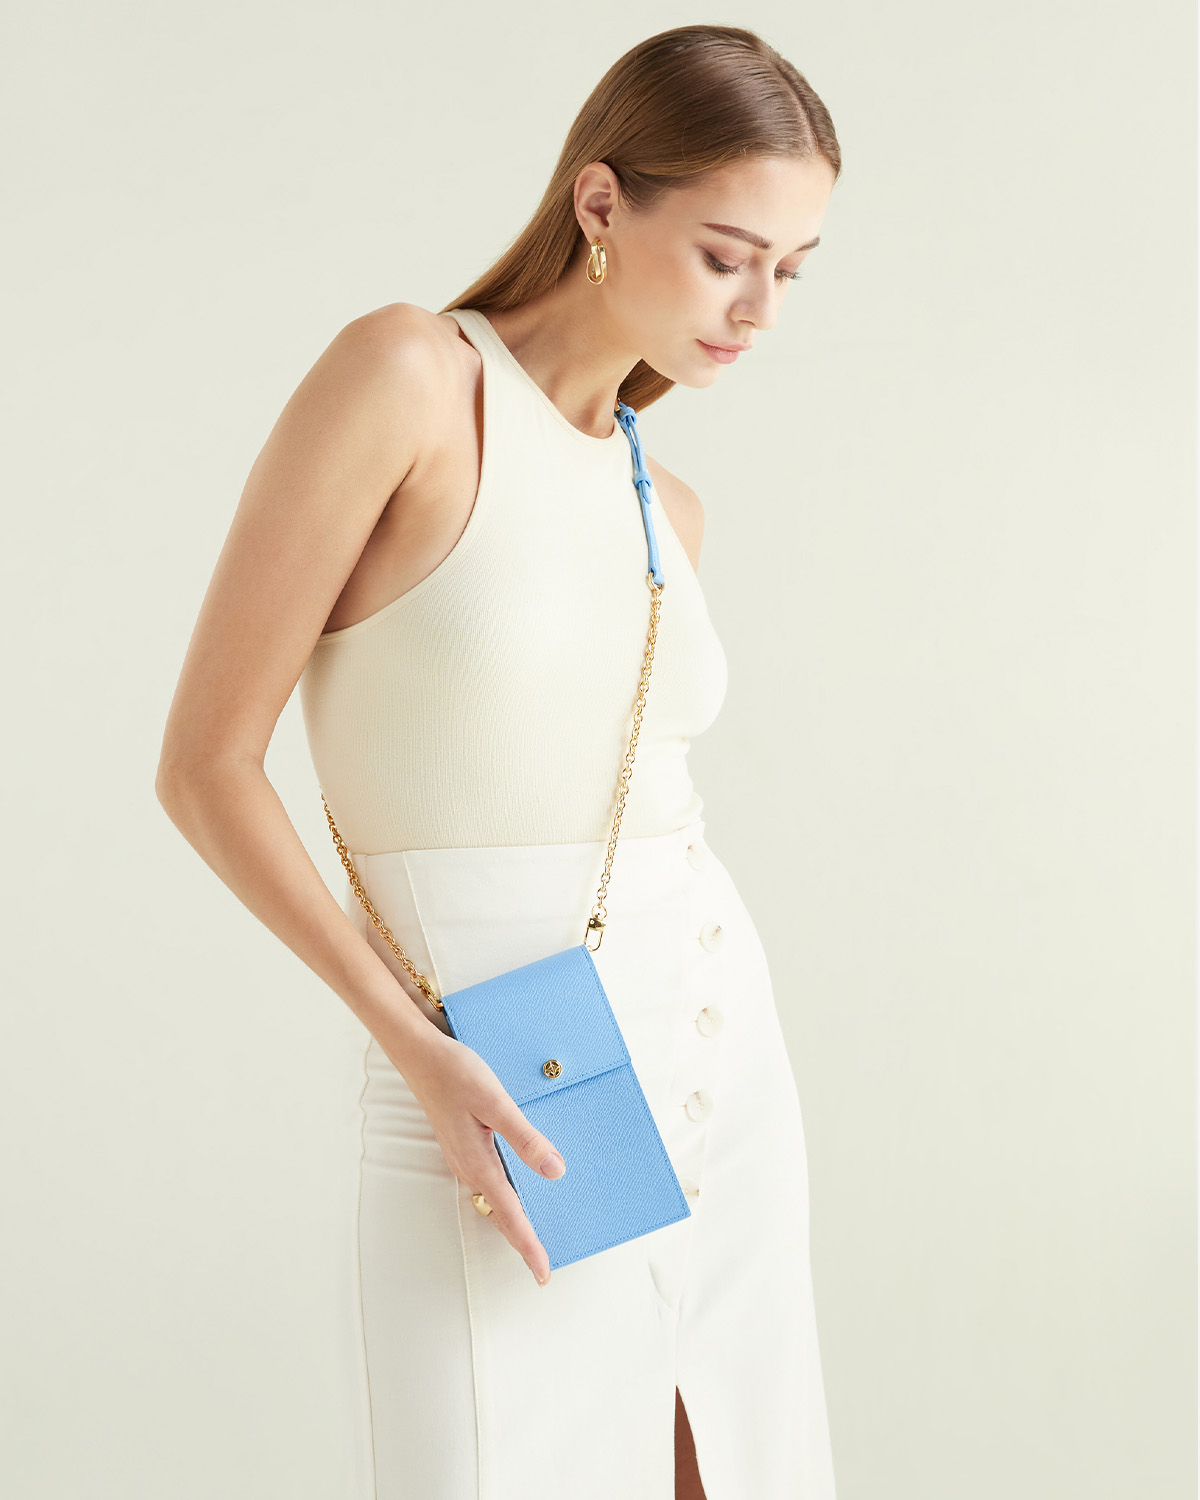 VERA Emily Phone Pouch with Leather Gold Chain in Serene Blue กระเป๋าใส่โทรศัพท์หนังแท้ พร้อมฟังก์ชั่นกระเป๋าสตางค์ มาพร้อมสายสะพายโซ่หนังถอดได้ สีฟ้า